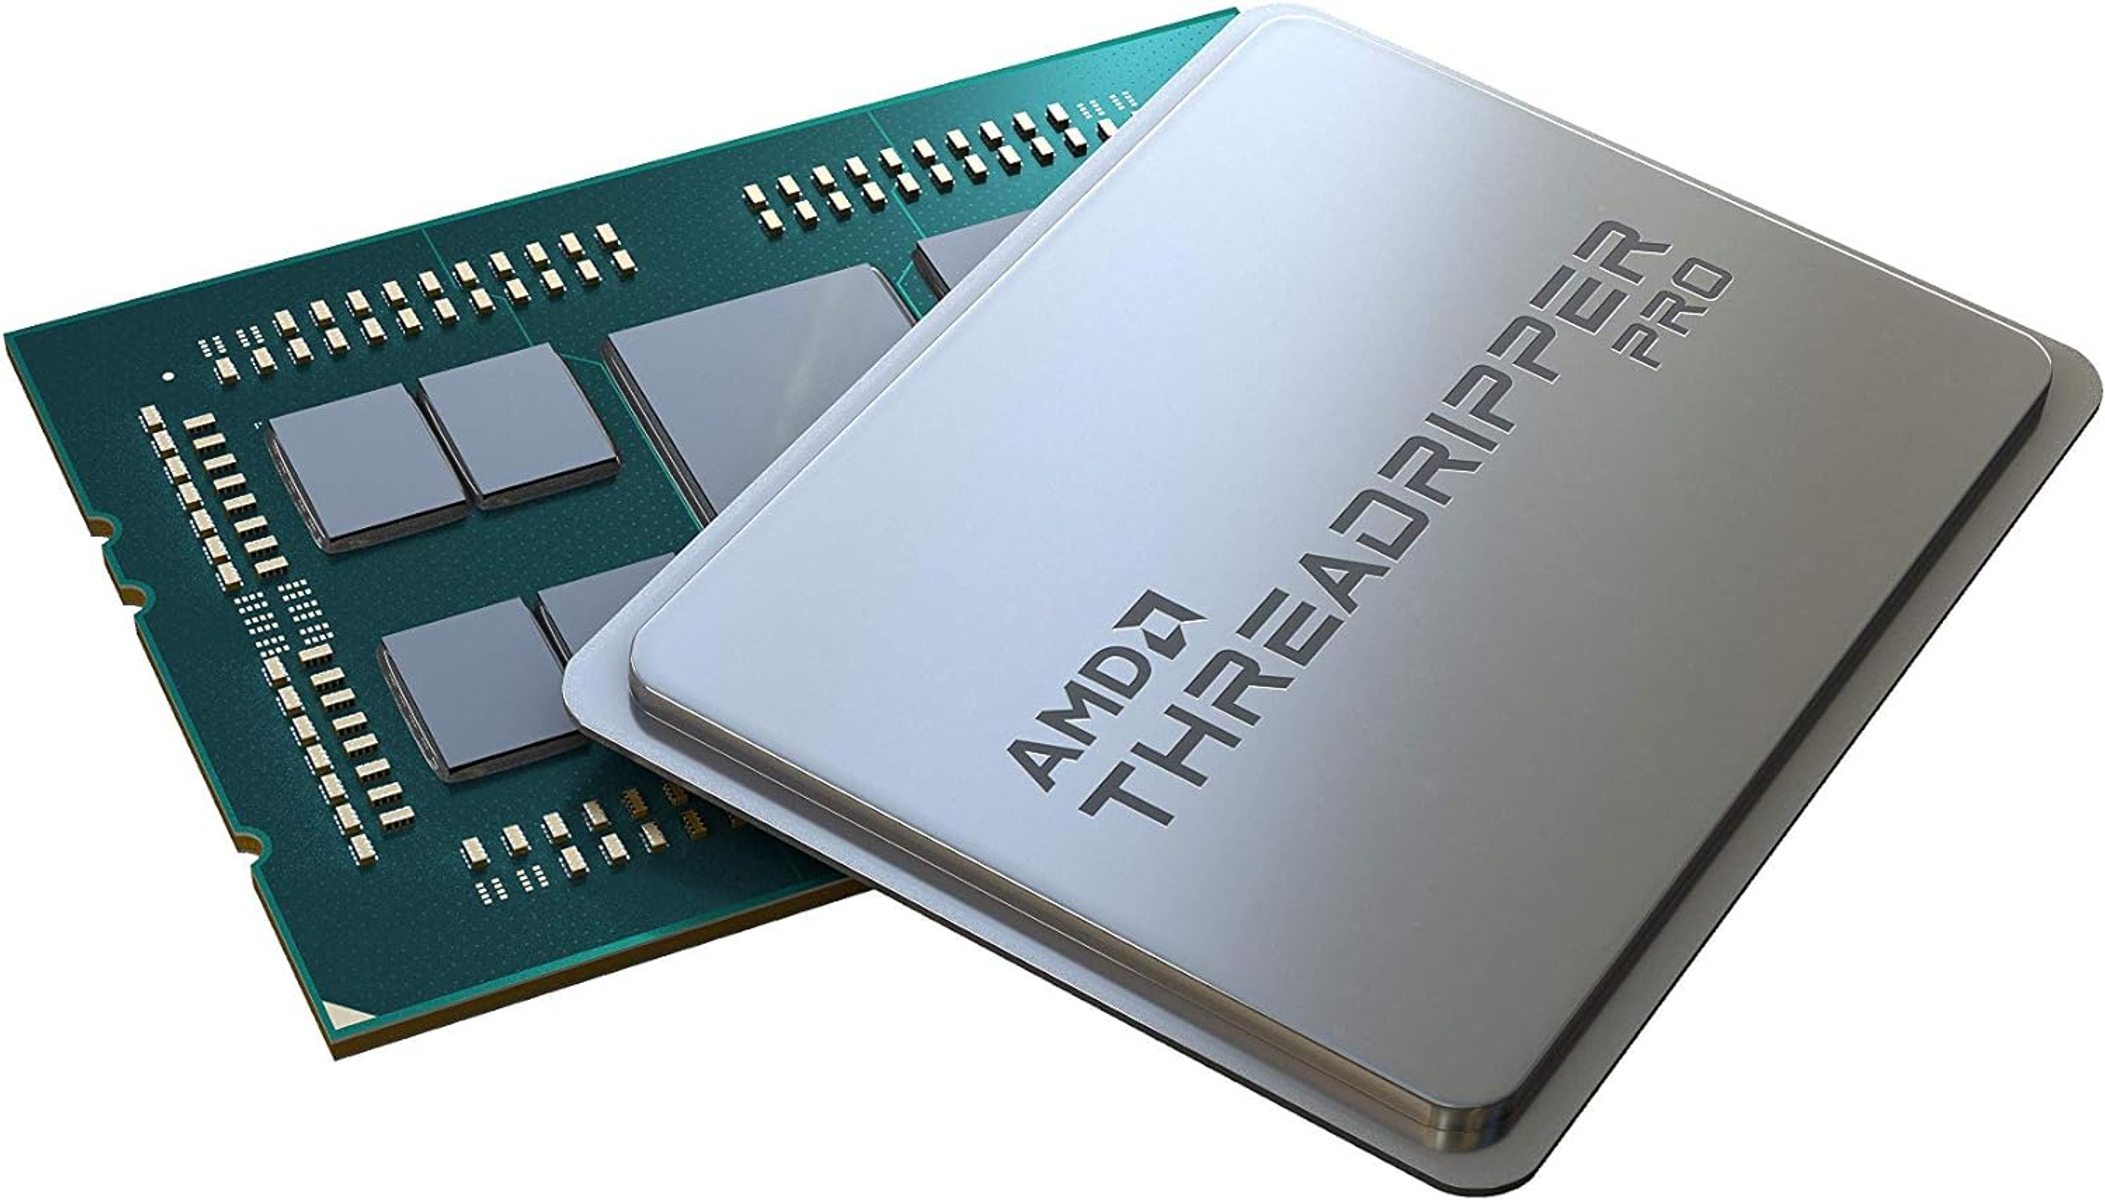 100-100000167WOF Prozessor AMD